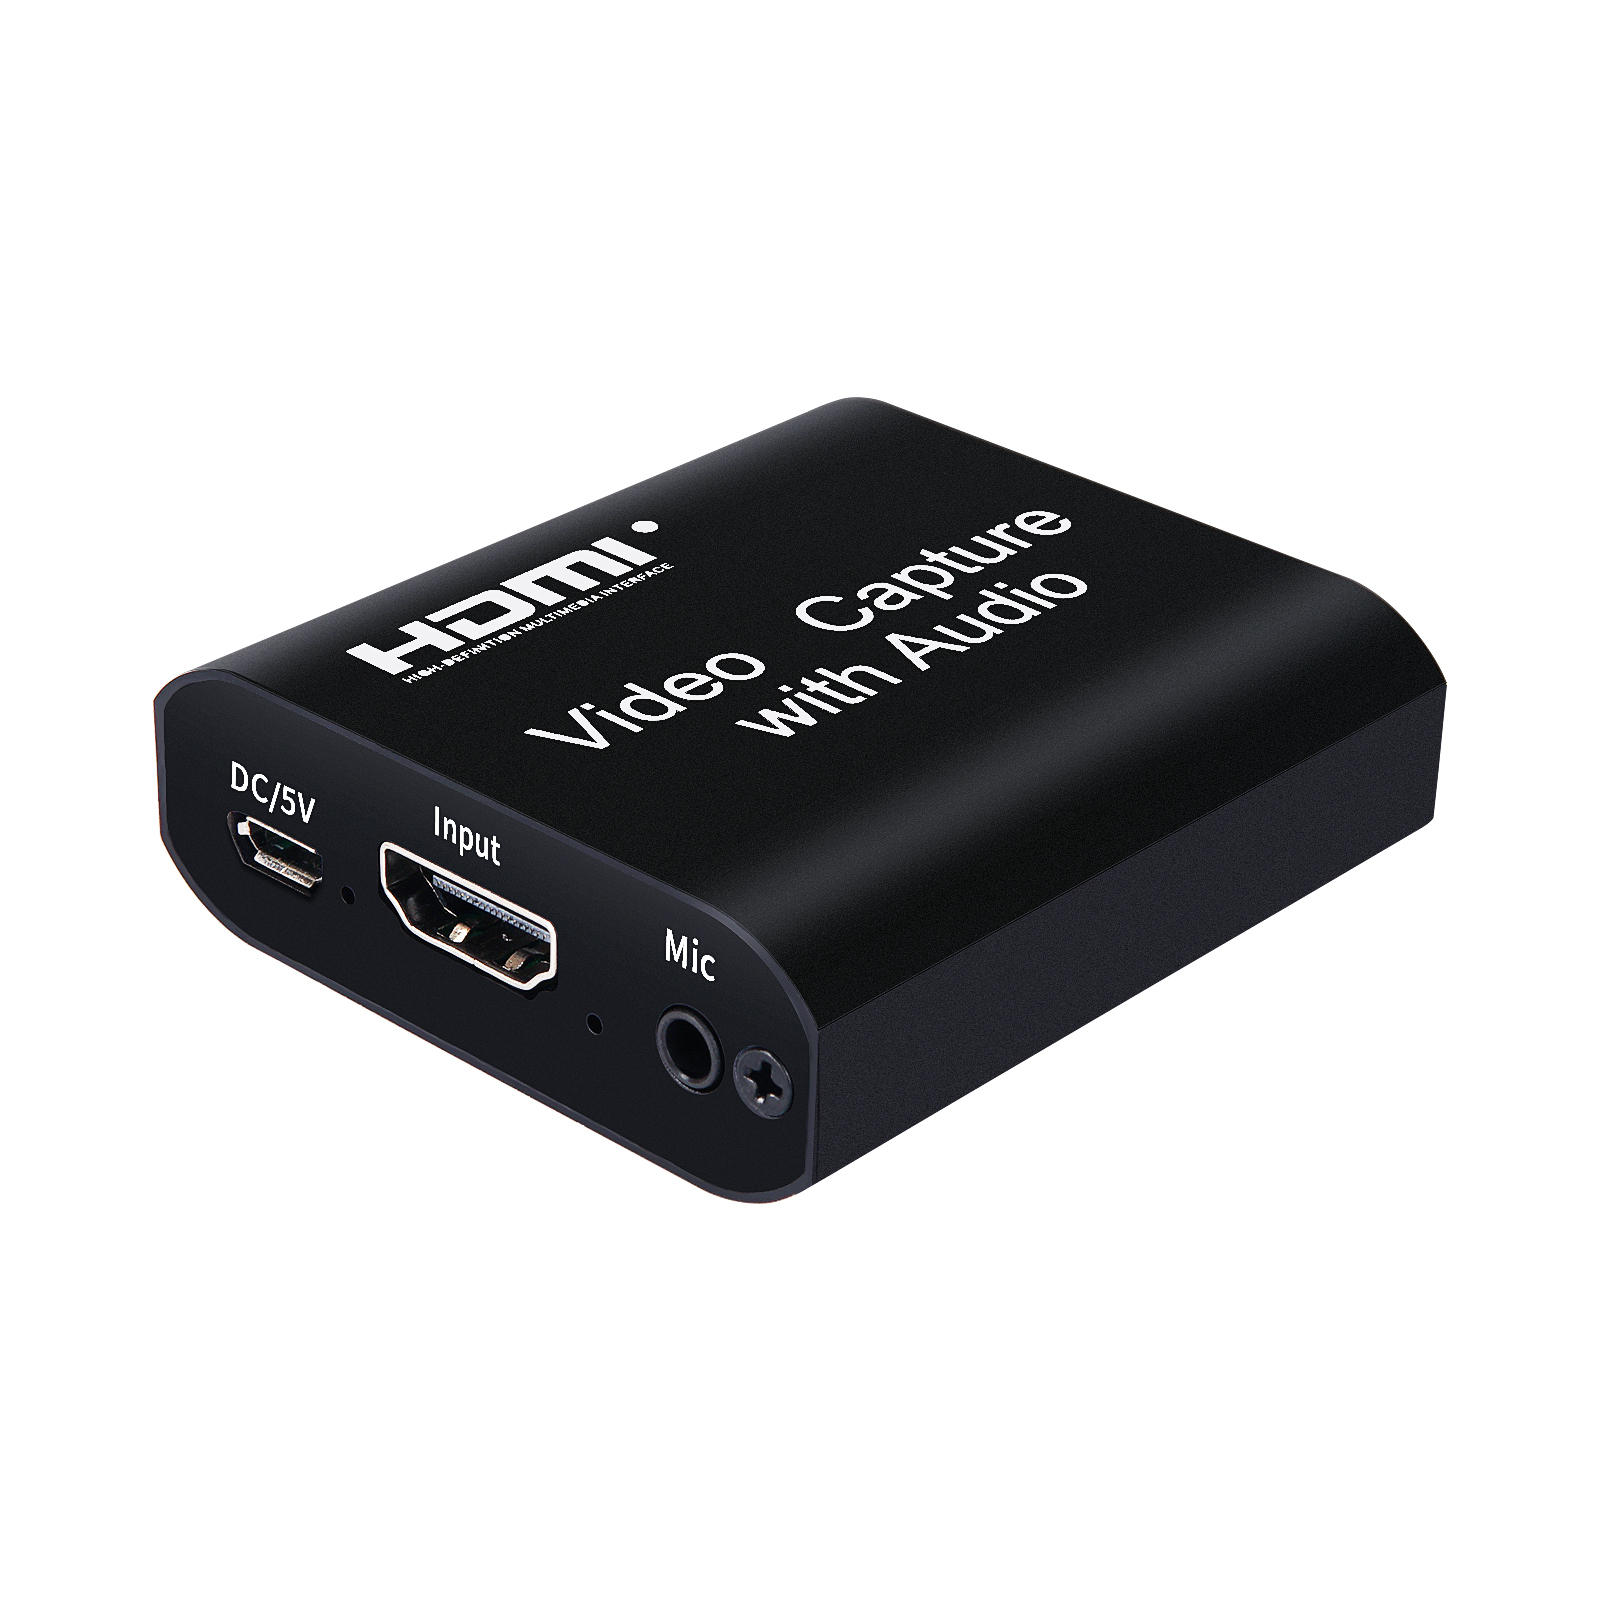 Andycine AC-U2H42 HDMI to USB Capture Card 4K 30HZ USB 2.0 Record